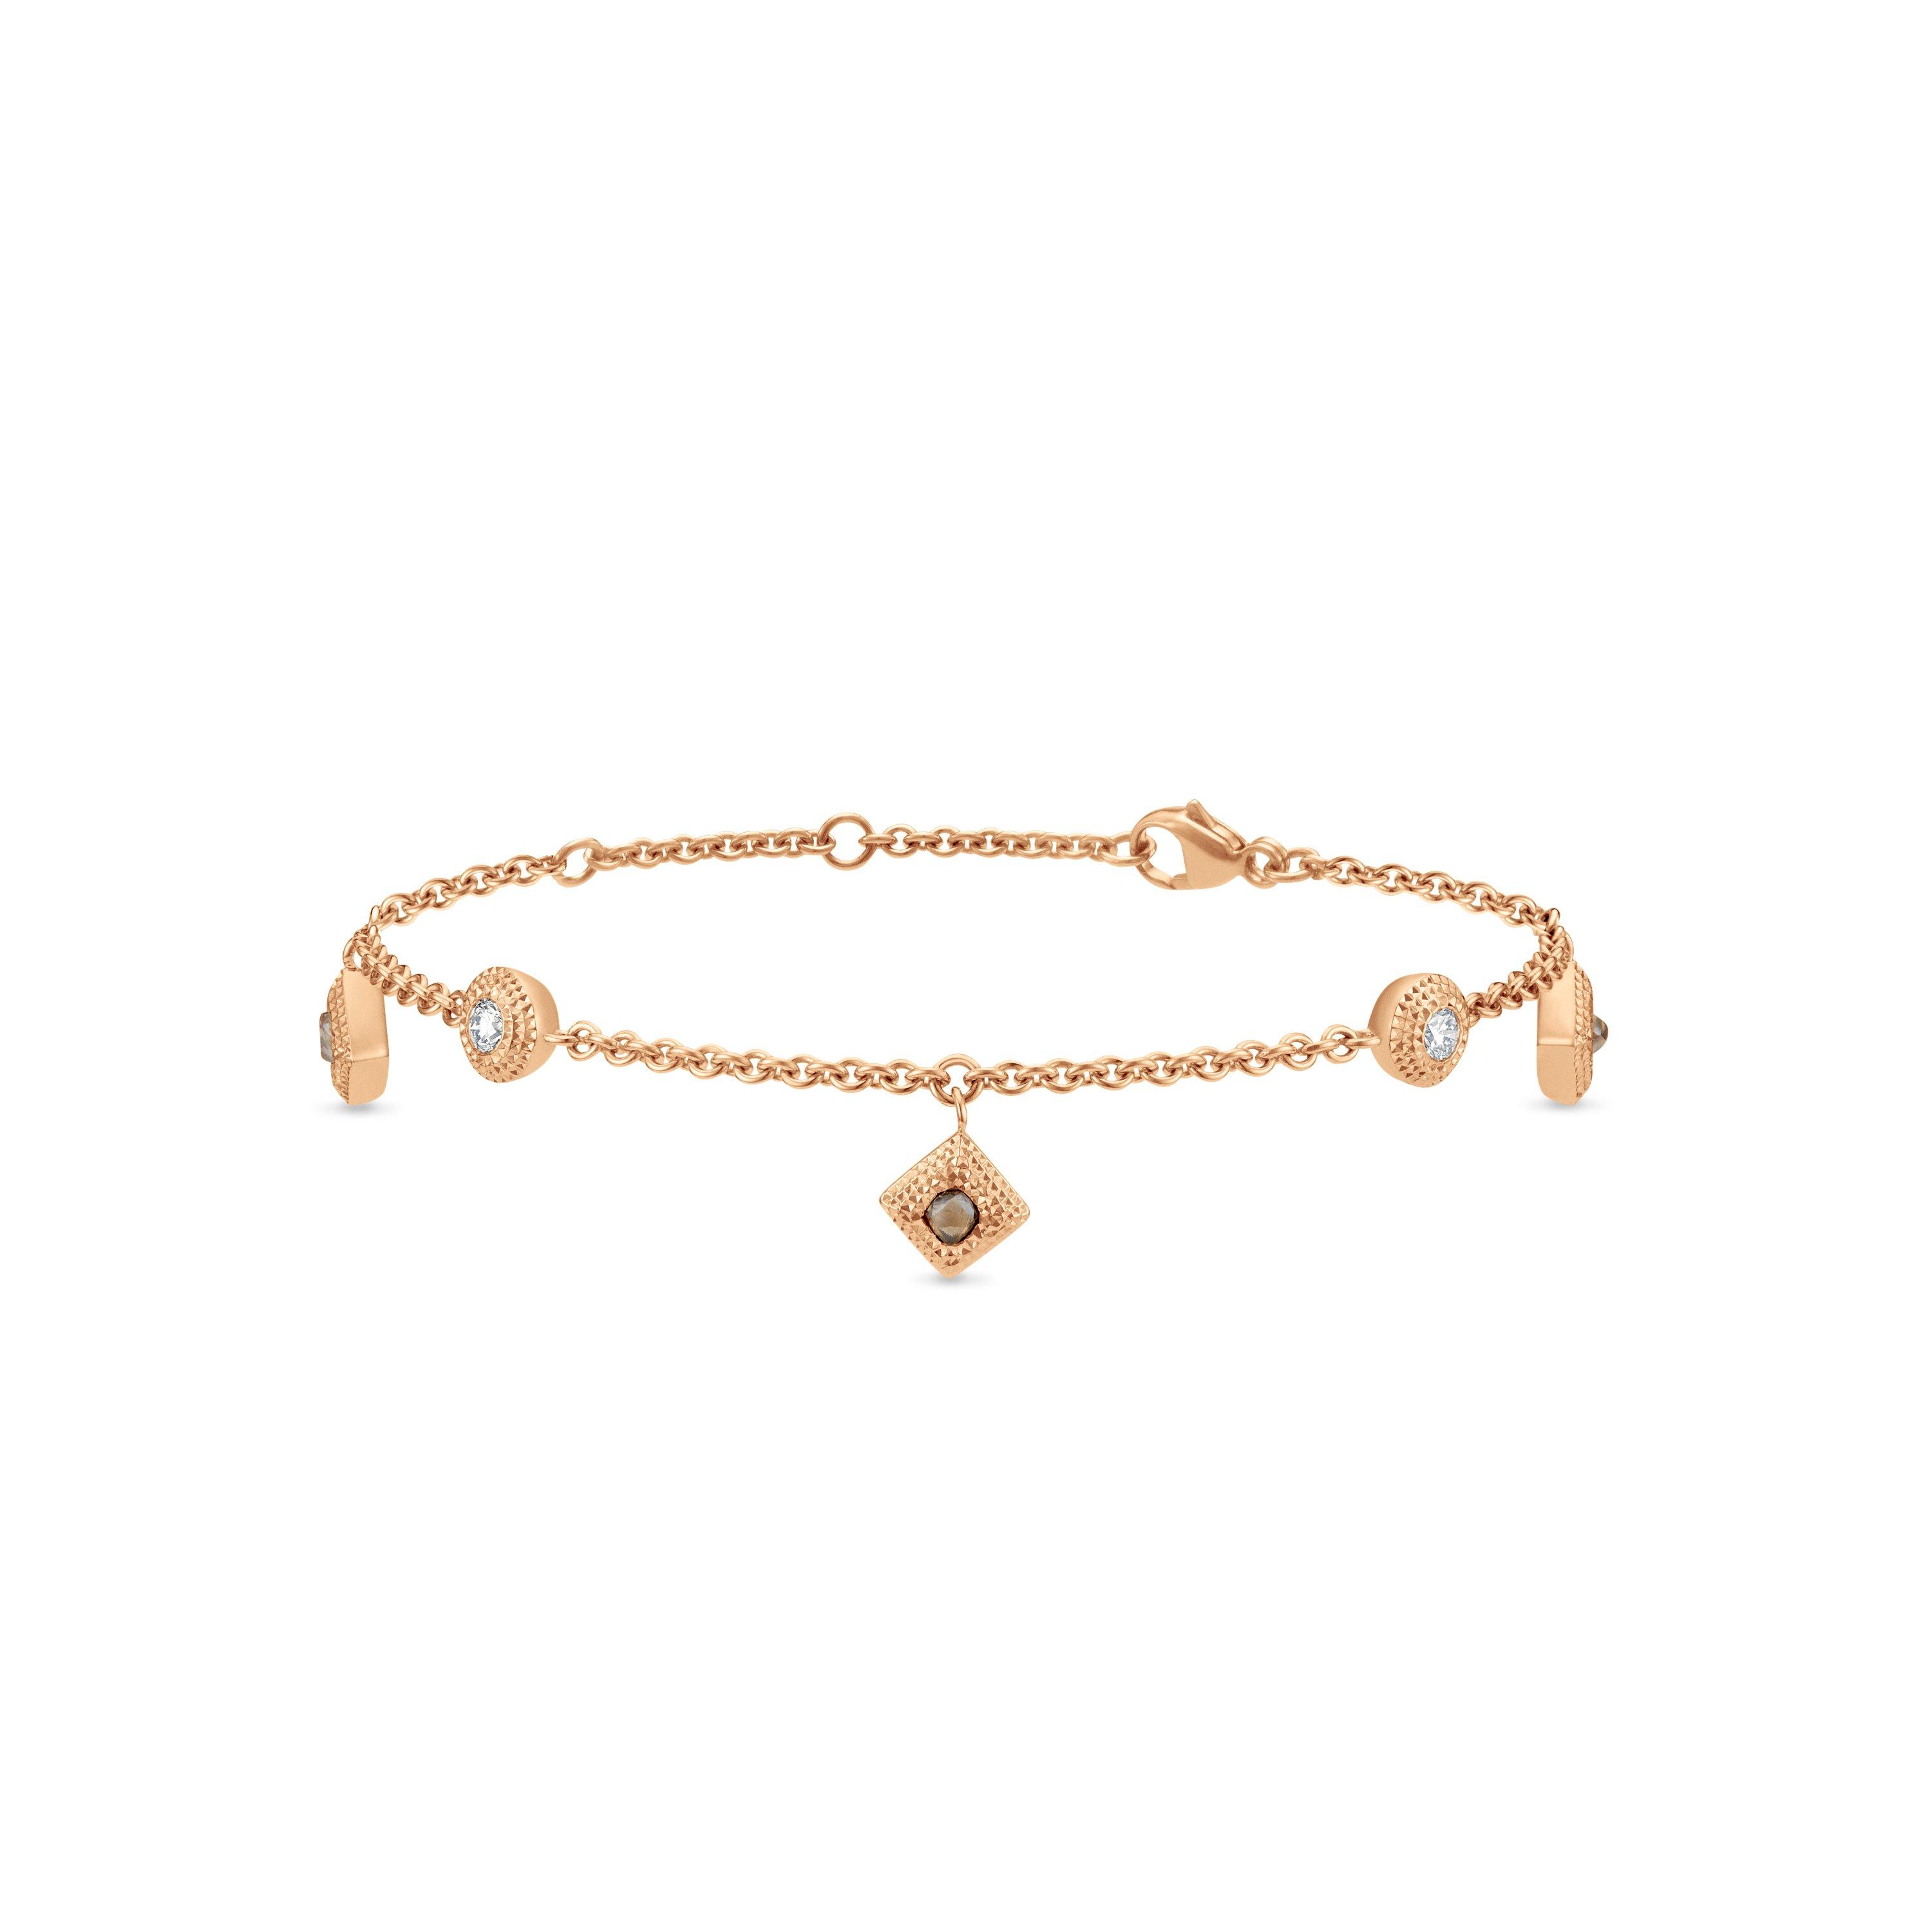 Talisman charm bracelet in rose gold, image 1